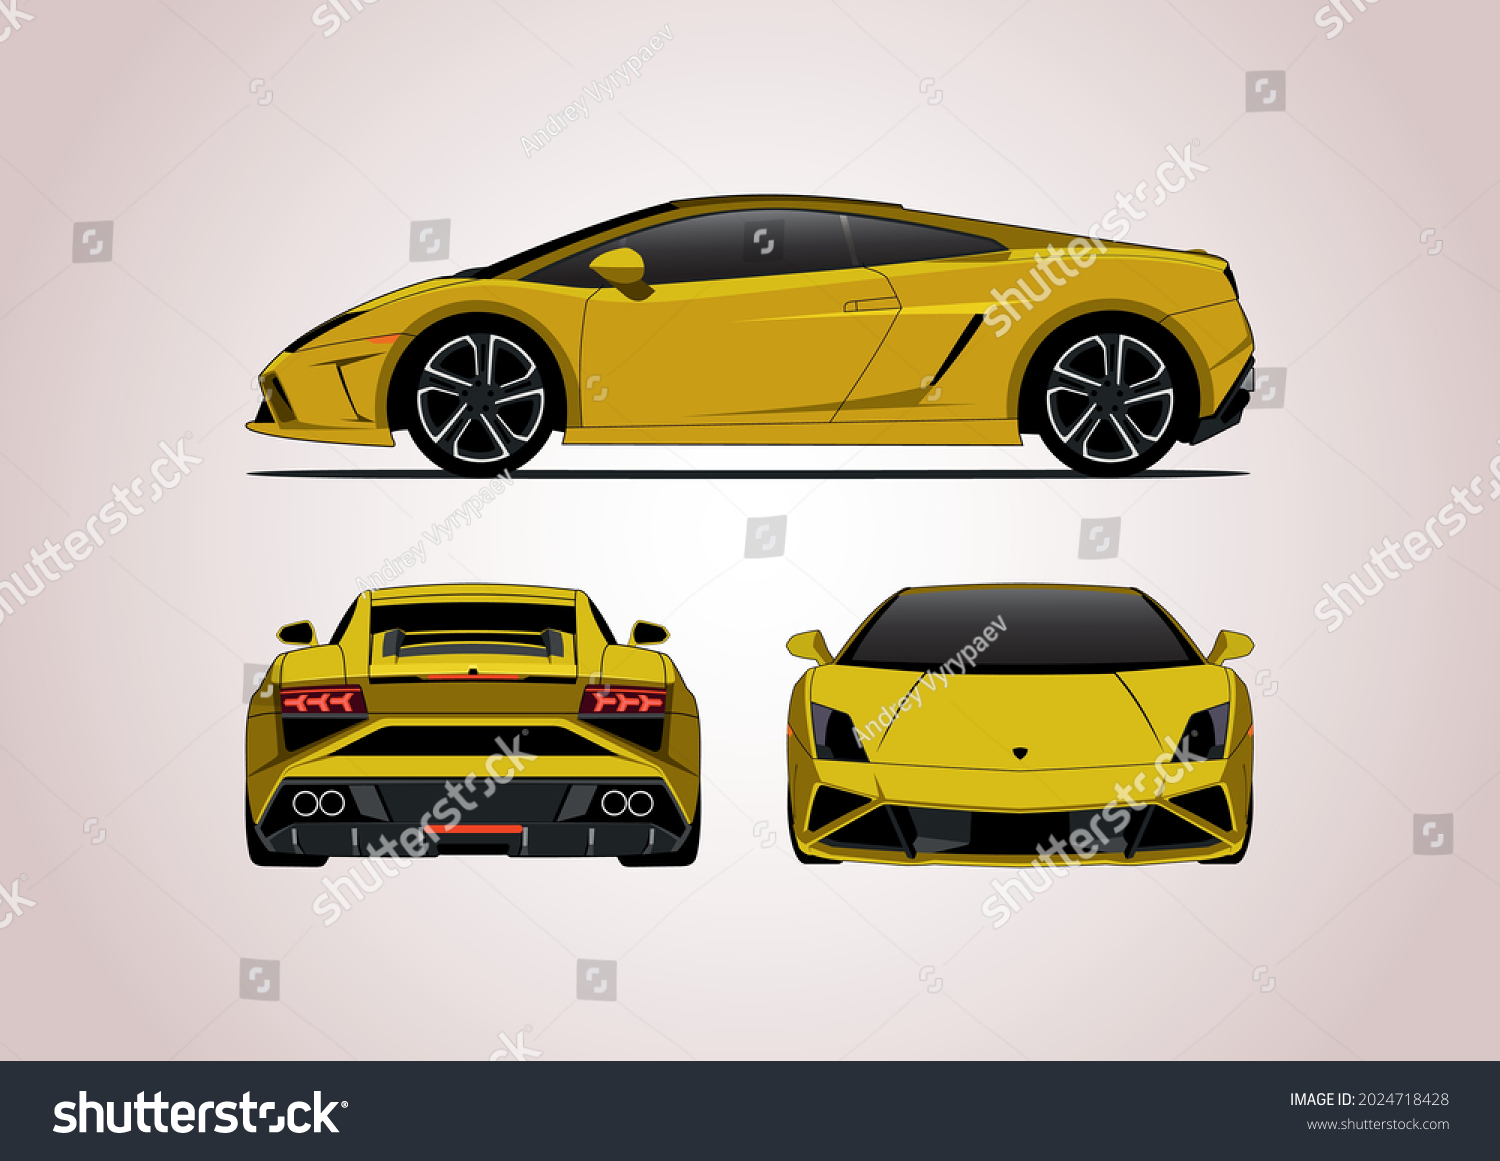 13 Lamborghini Gallardo Stock Vectors Images And Vector Art Shutterstock